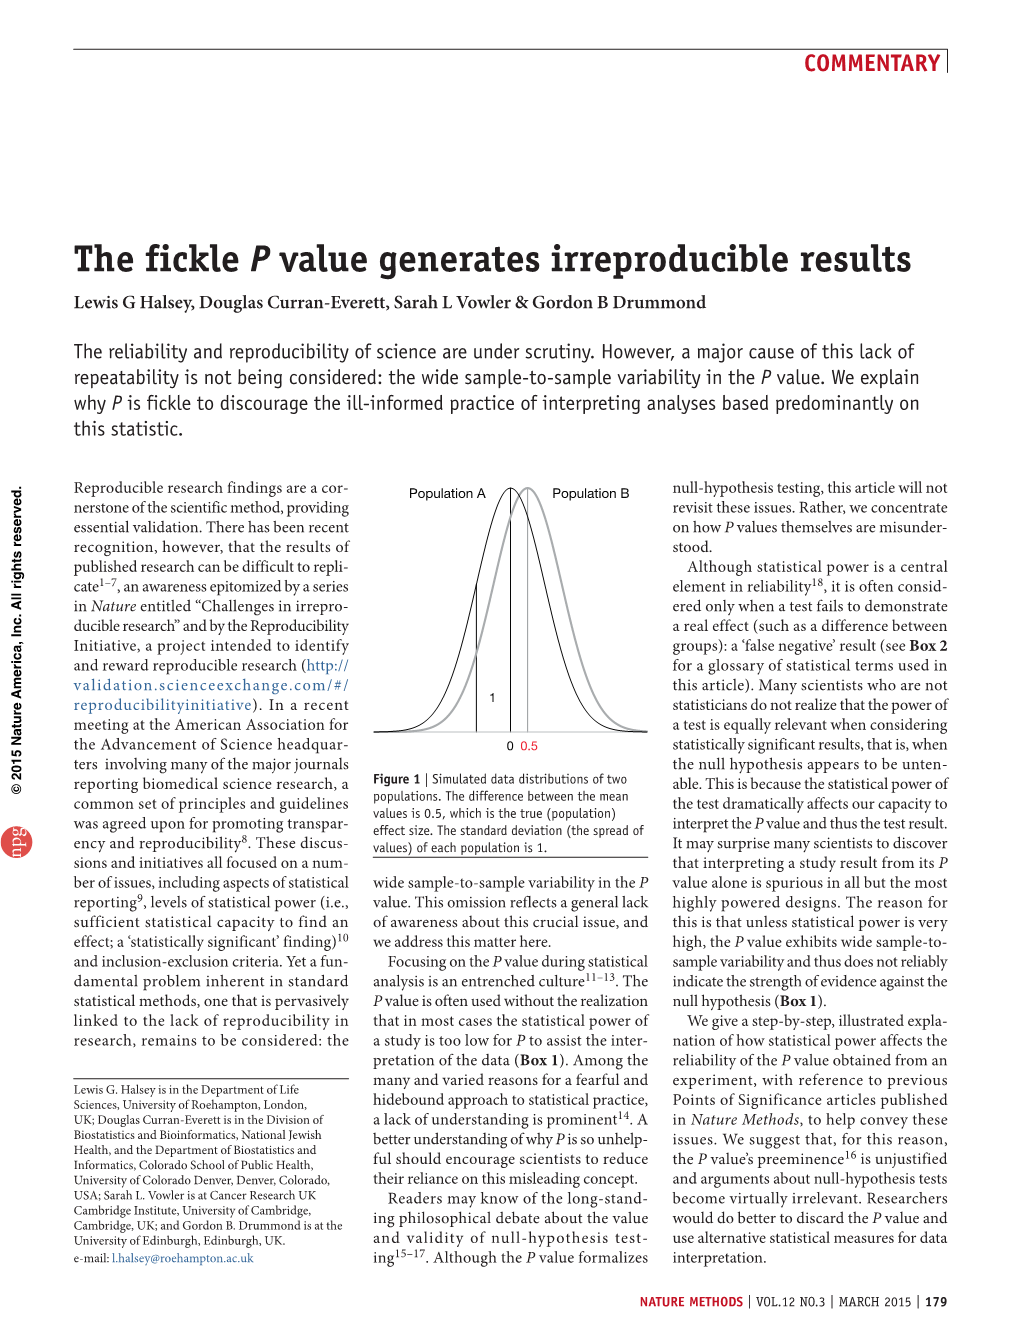 The Fickle P Value Generates Irreproducible Results Lewis G Halsey, Douglas Curran-Everett, Sarah L Vowler & Gordon B Drummond